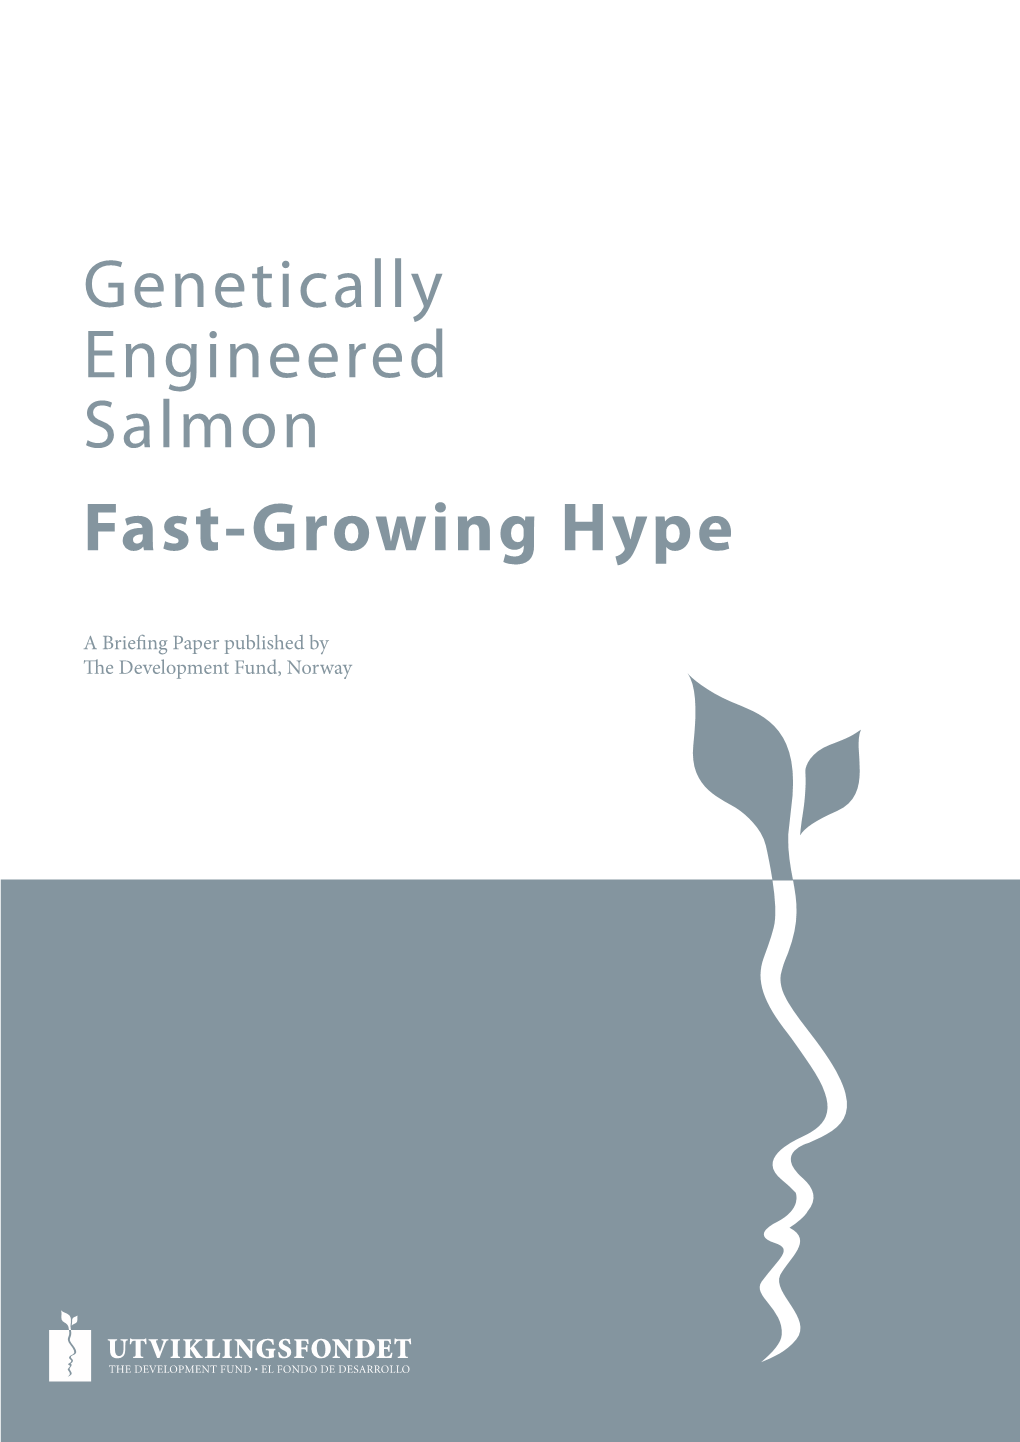 Genetically Engineered Salmon Fast-Growing Hype